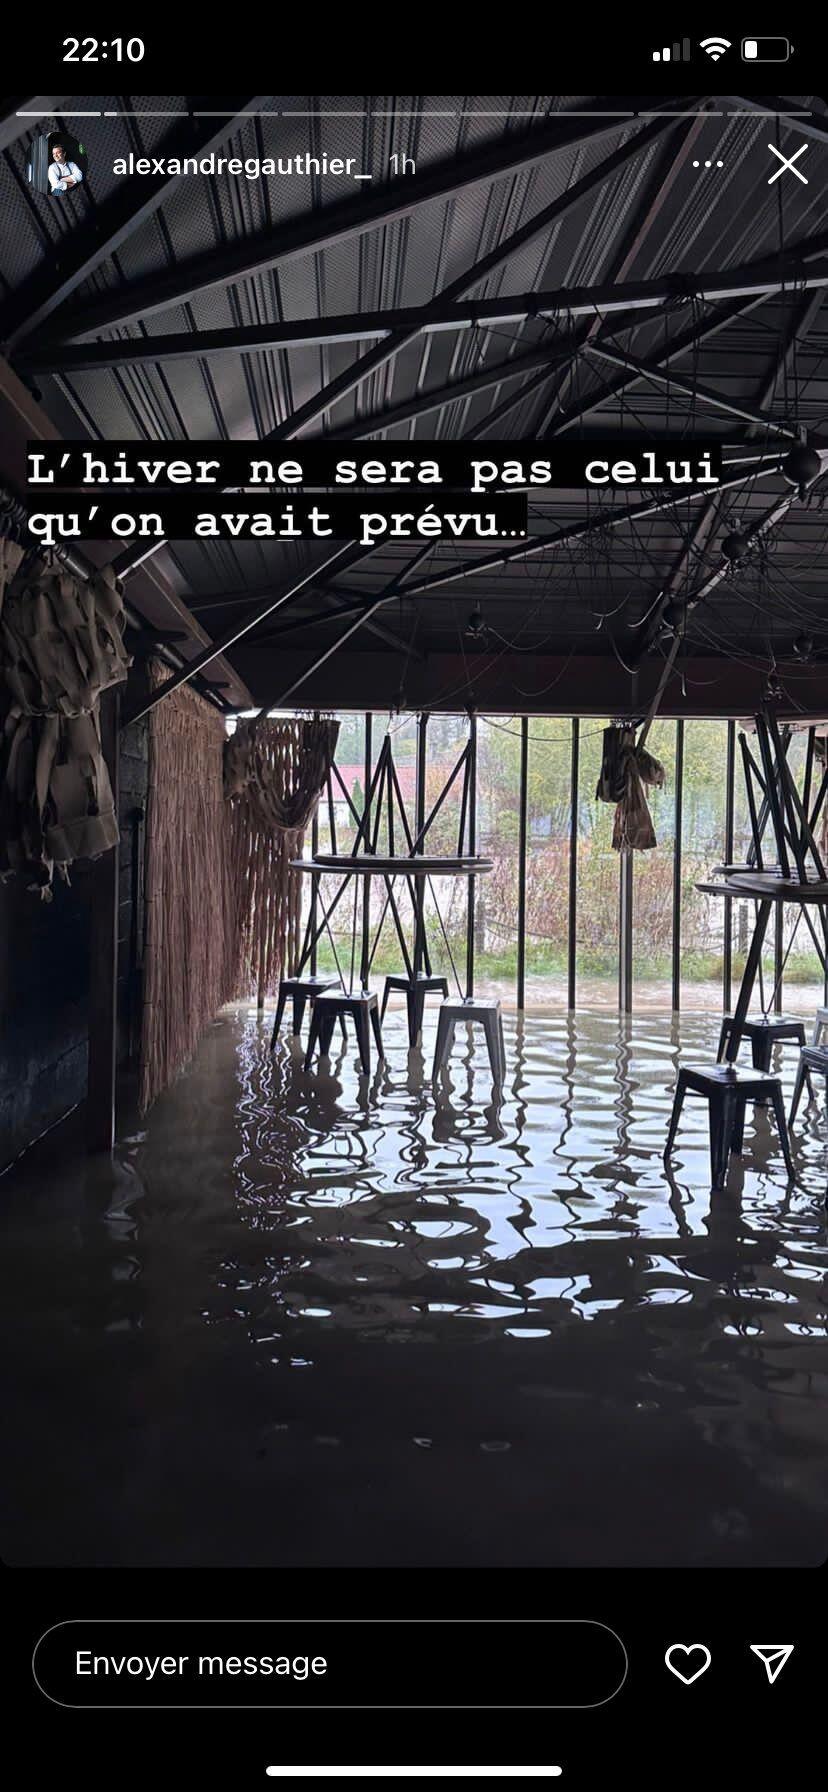 Le restaurant "La Grenouillère" inondé.